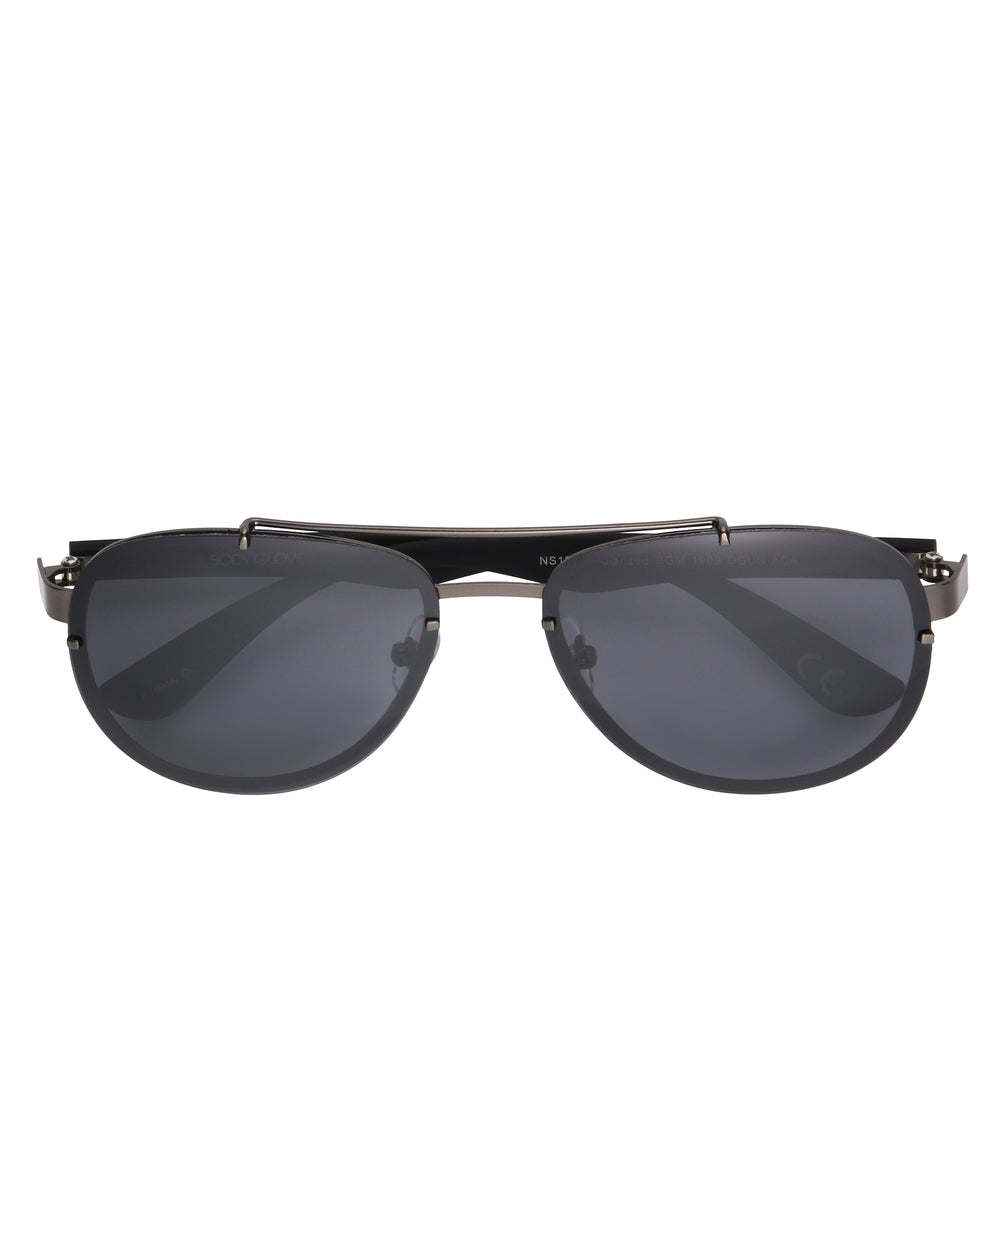 Rush Polarized Aviator Sunglasses - Gunmetal/Black